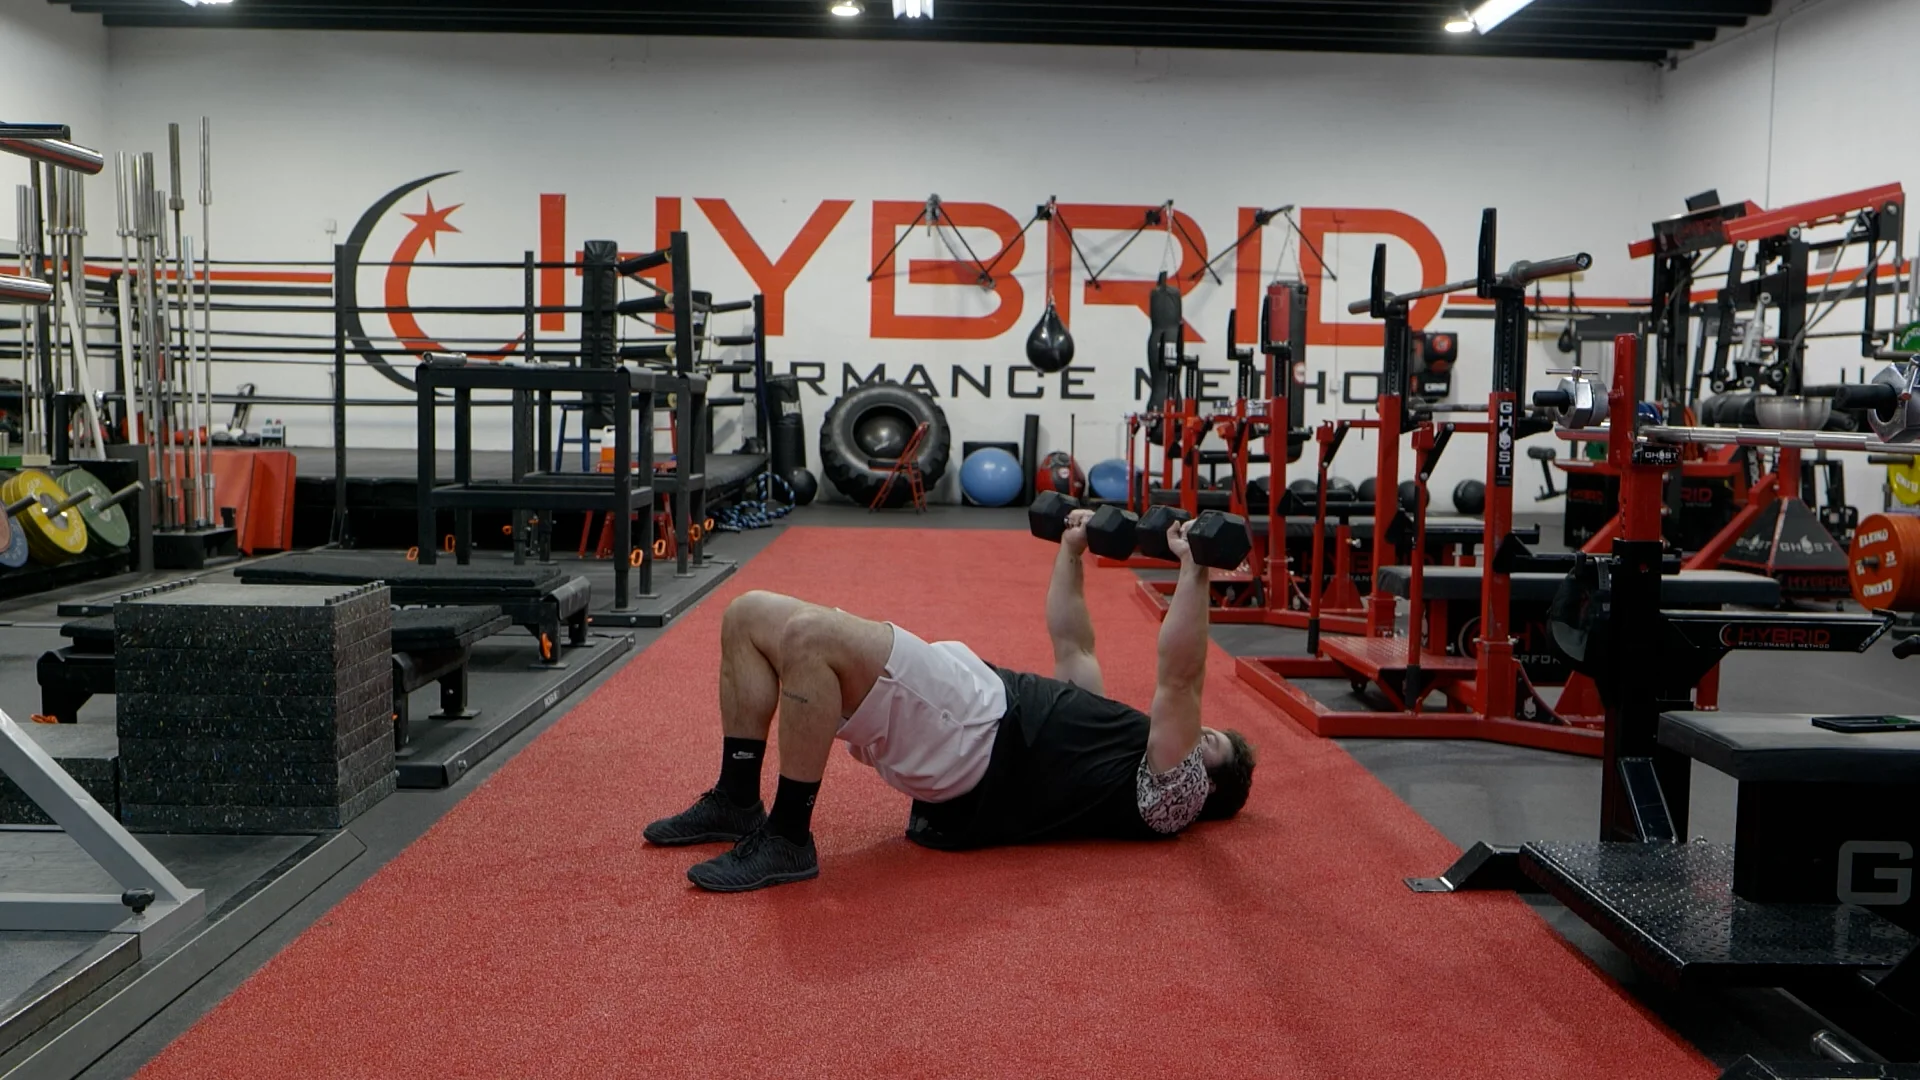 HYBRID Performance Method 